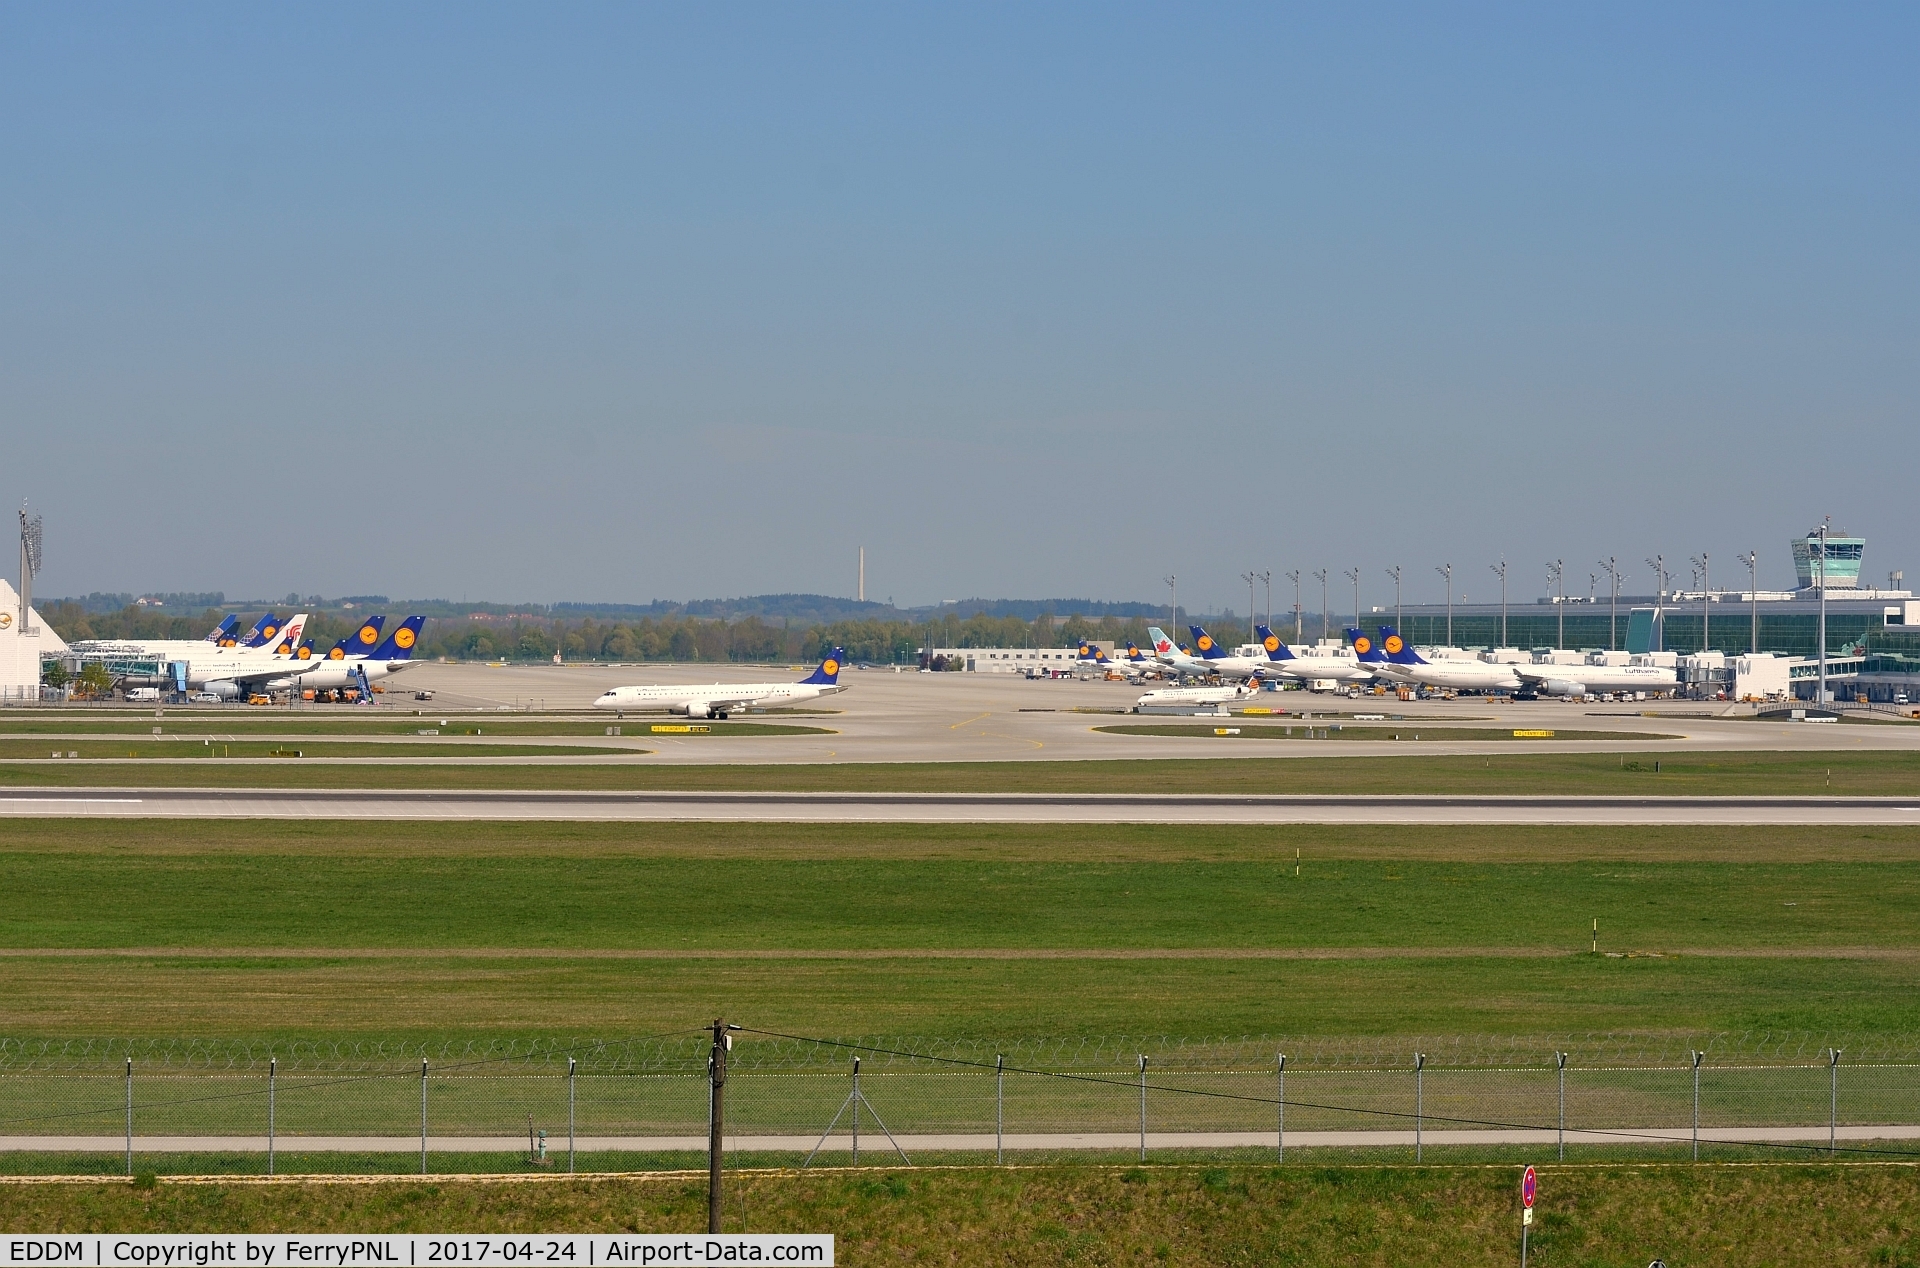 Munich International Airport (Franz Josef Strauß International Airport), Munich Germany (EDDM) - LH & partner terminals seen from south side perimiter road.